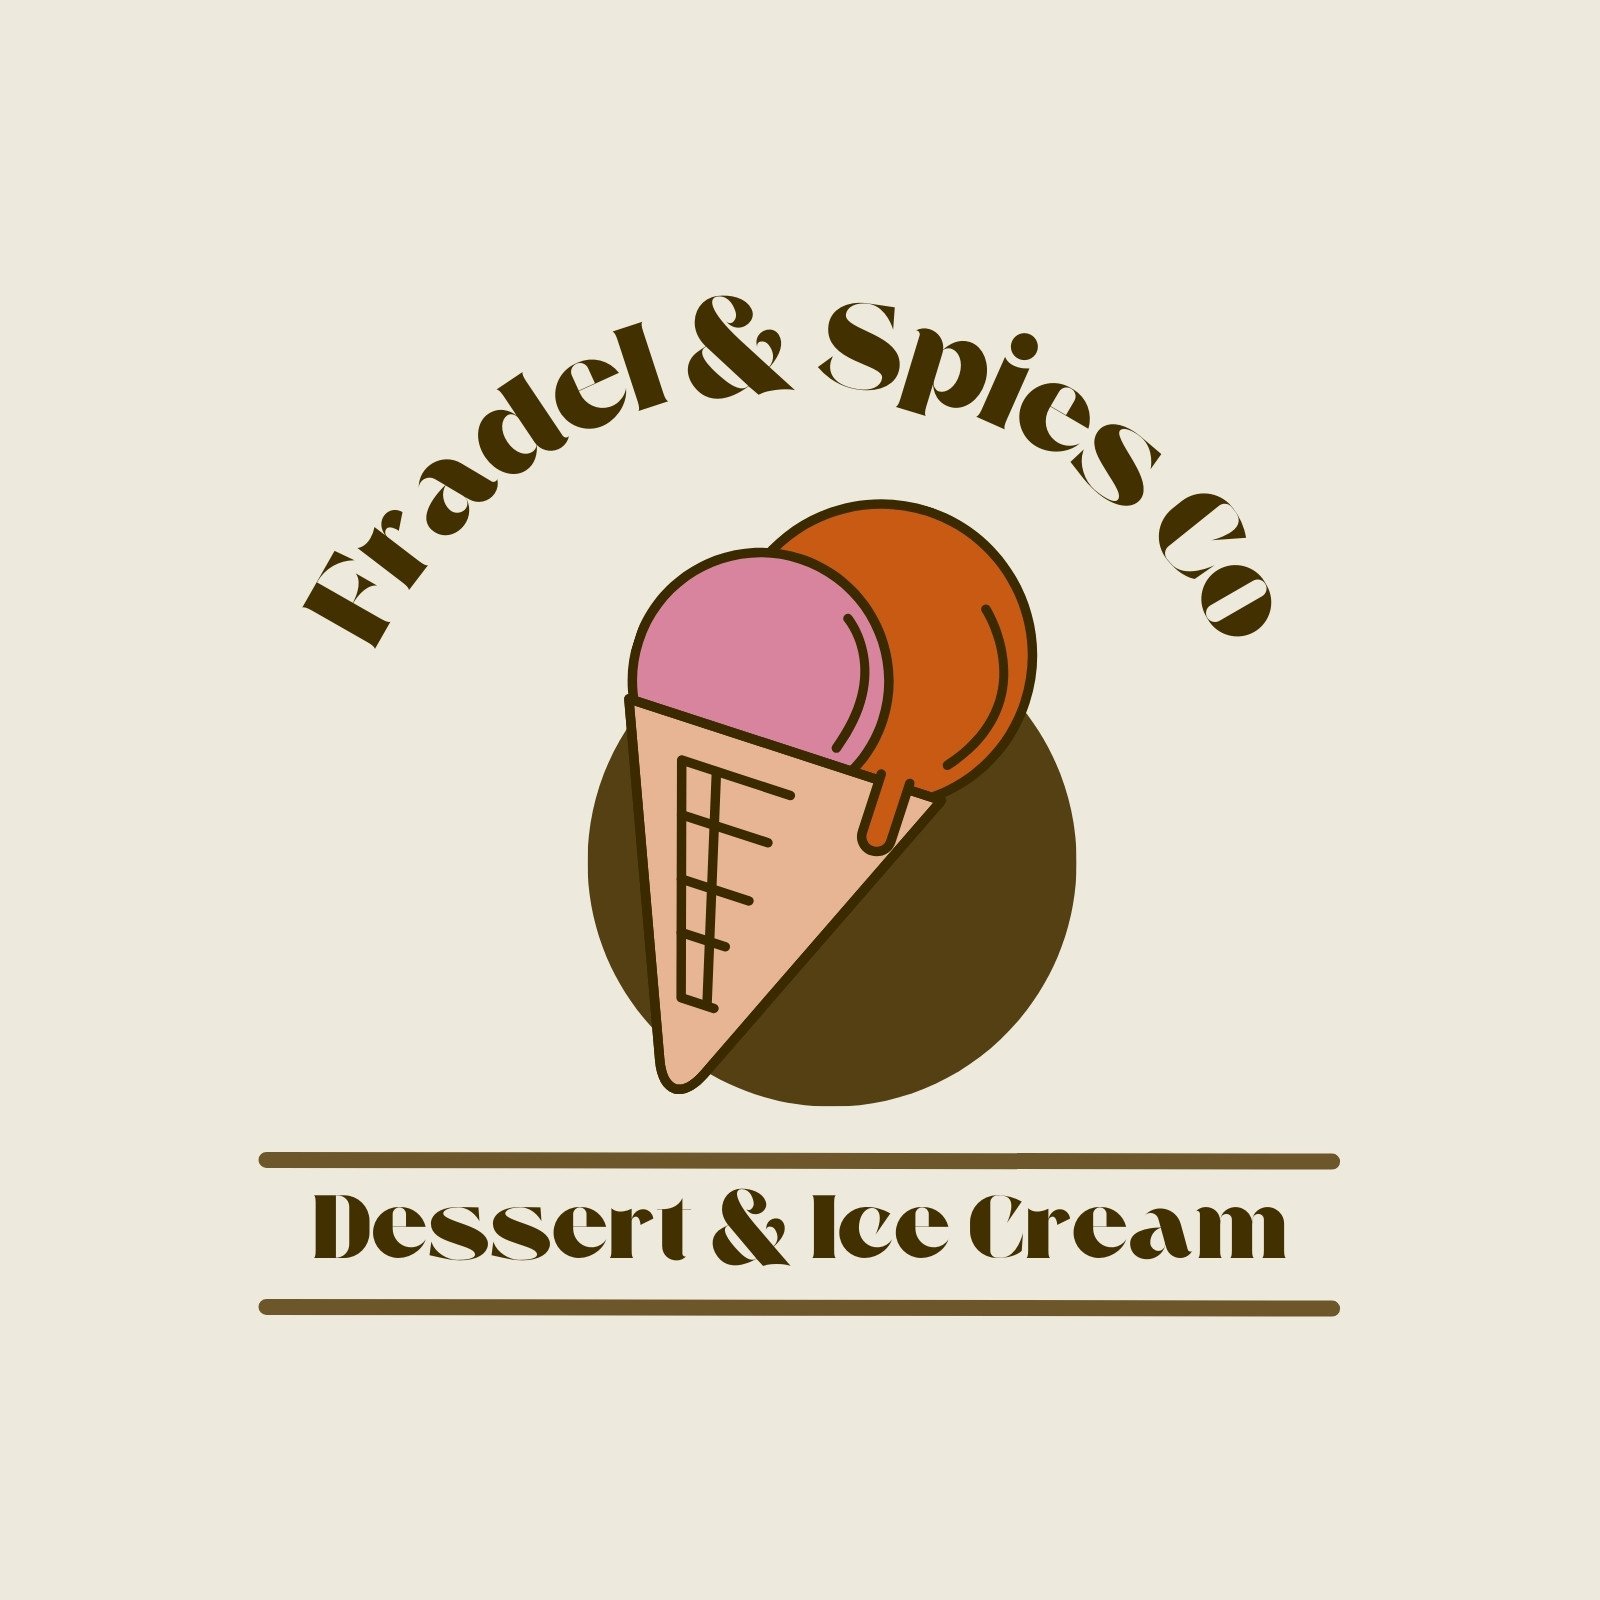 dessert company logos